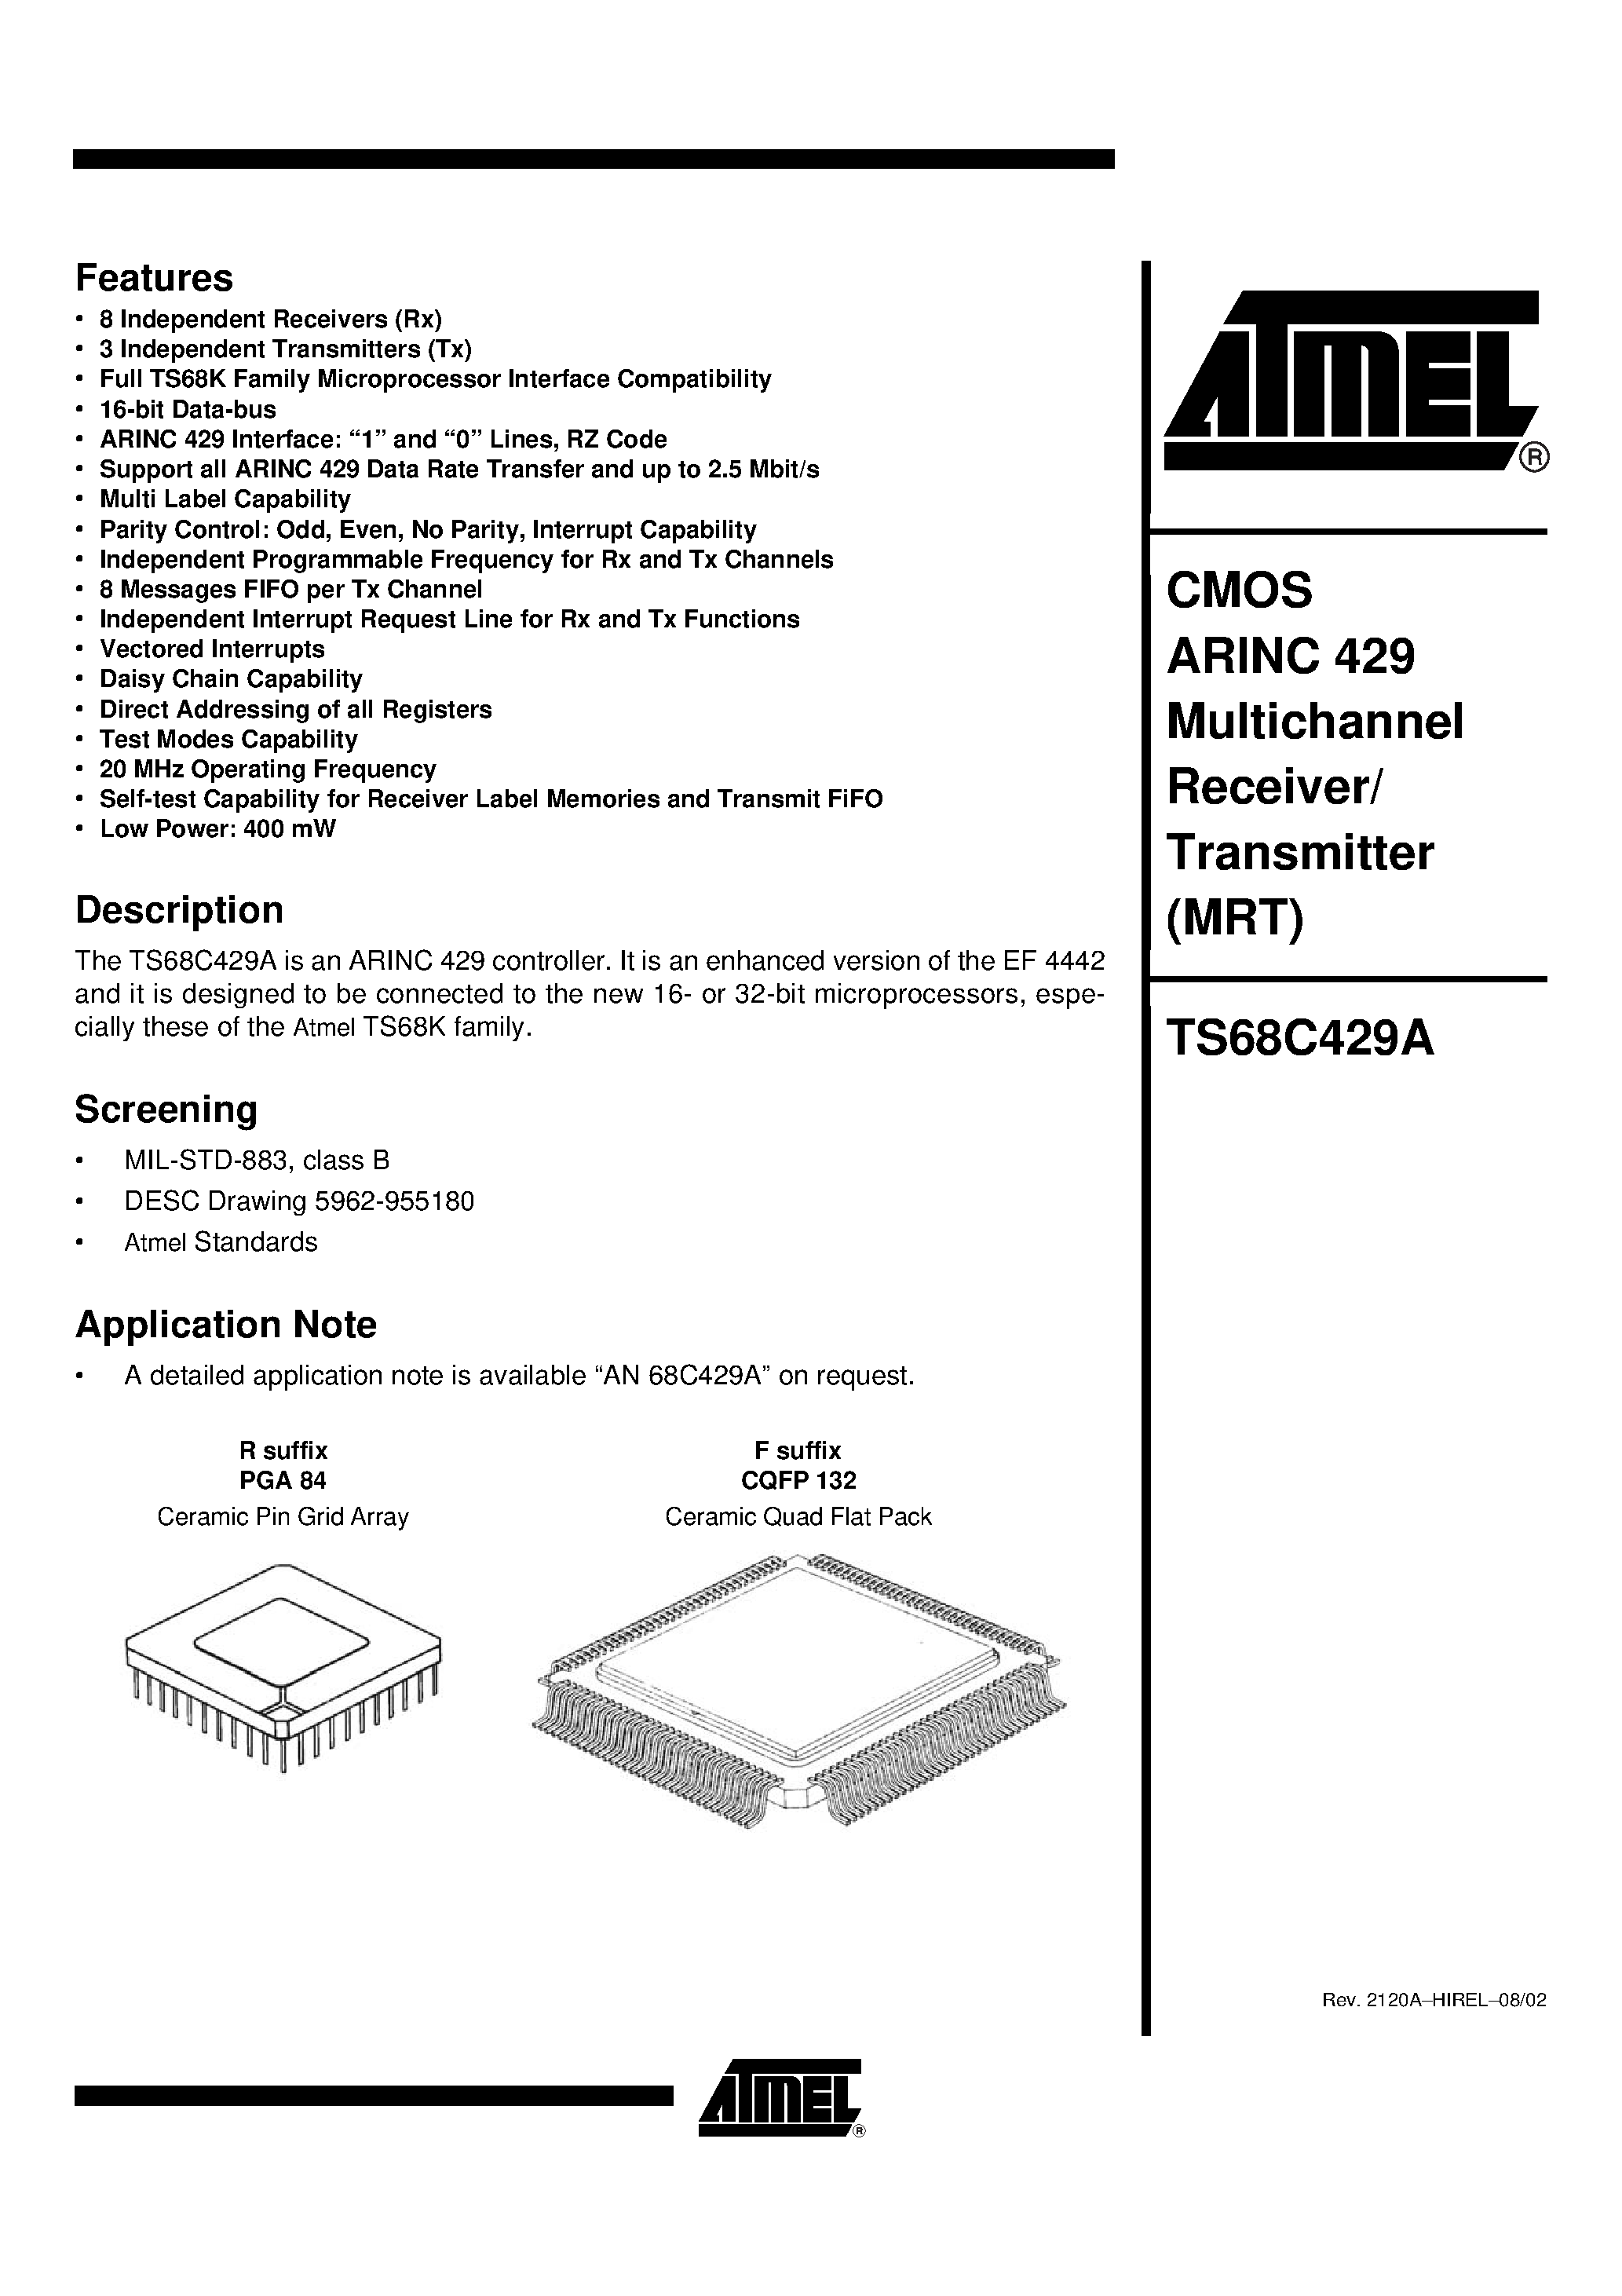 Datasheet TS68C429A - CMOS ARINC 429 Multichannel Receiver/ Transmitter MRT page 1